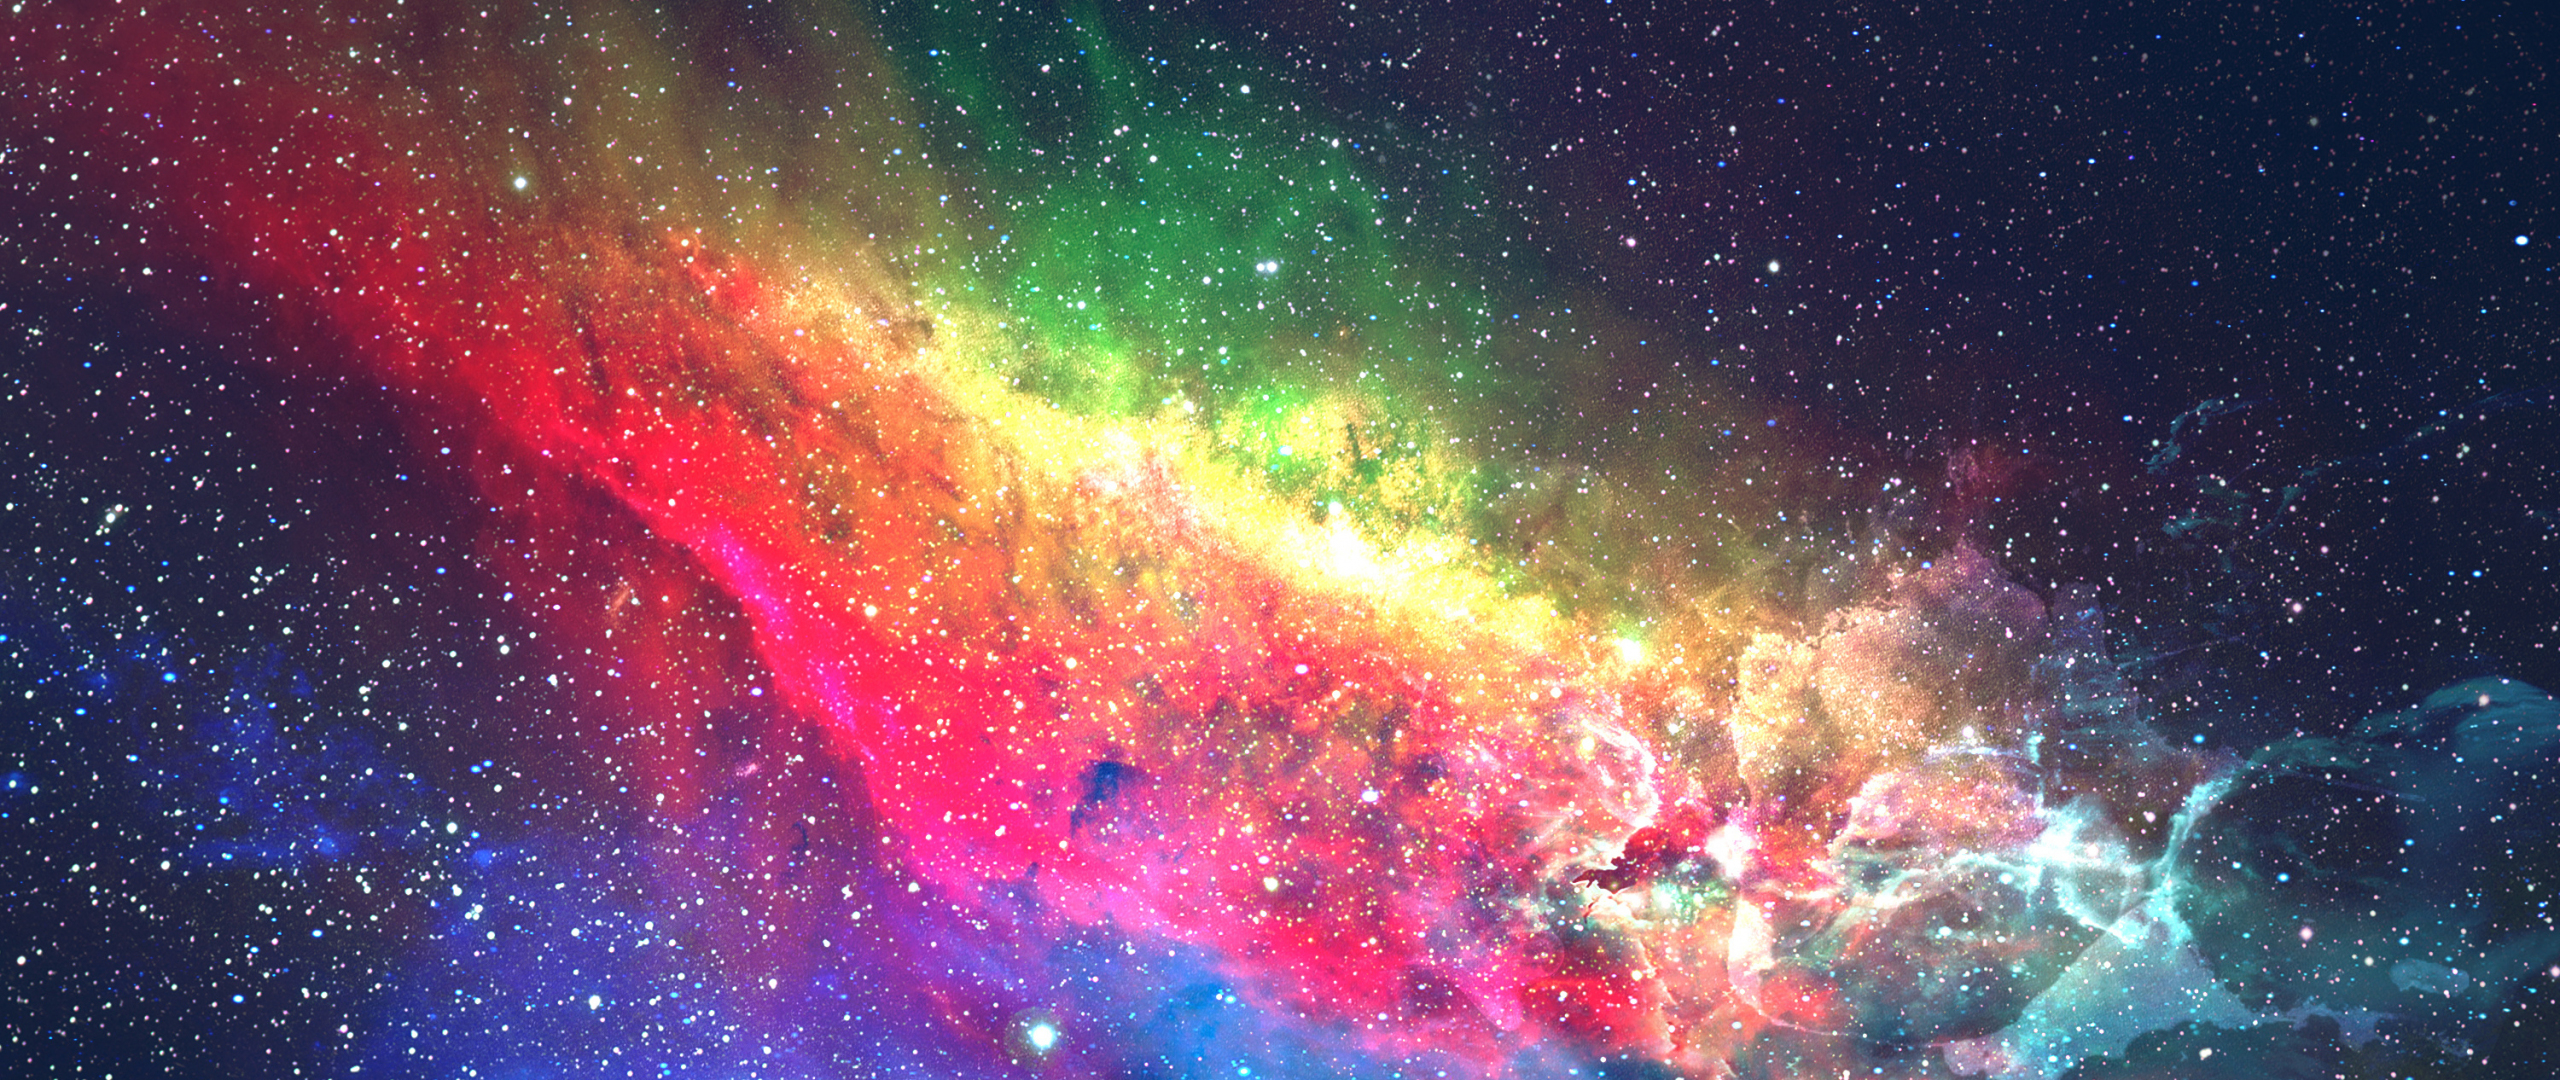 Download 2560x1080 Wallpaper Colorful Galaxy Space Digital Art